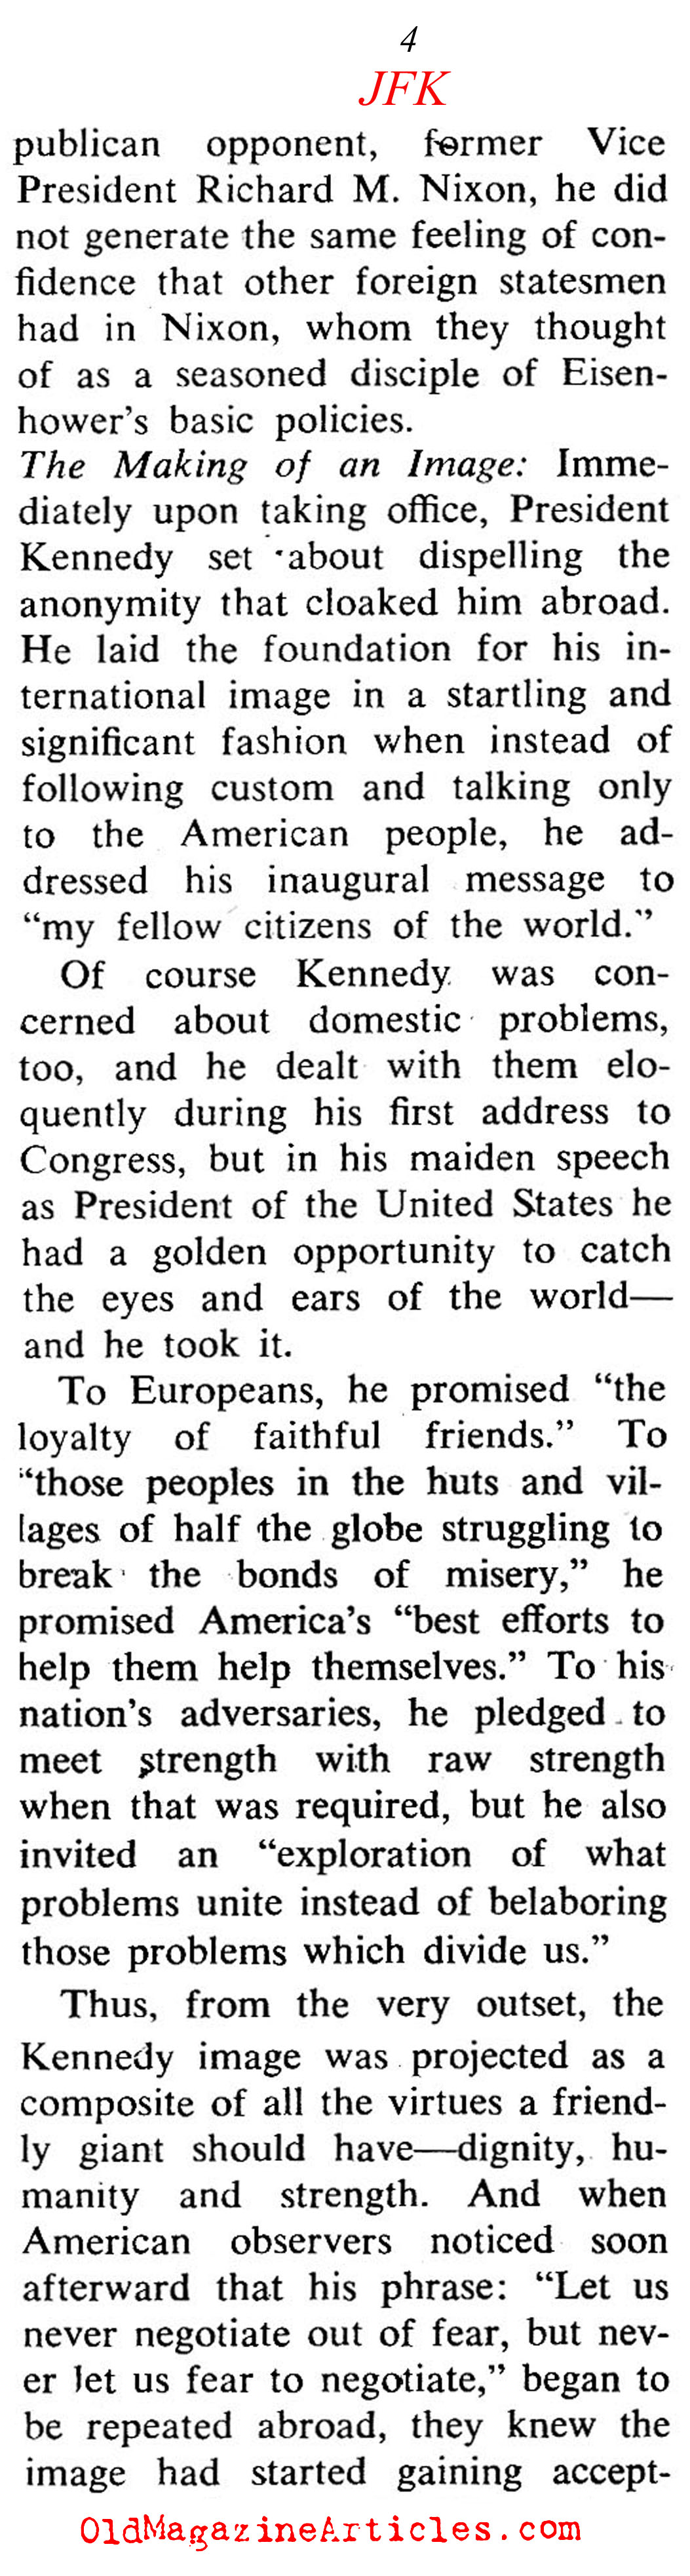 JFK - As the World Saw Him (Coronet Magazine, 1964)